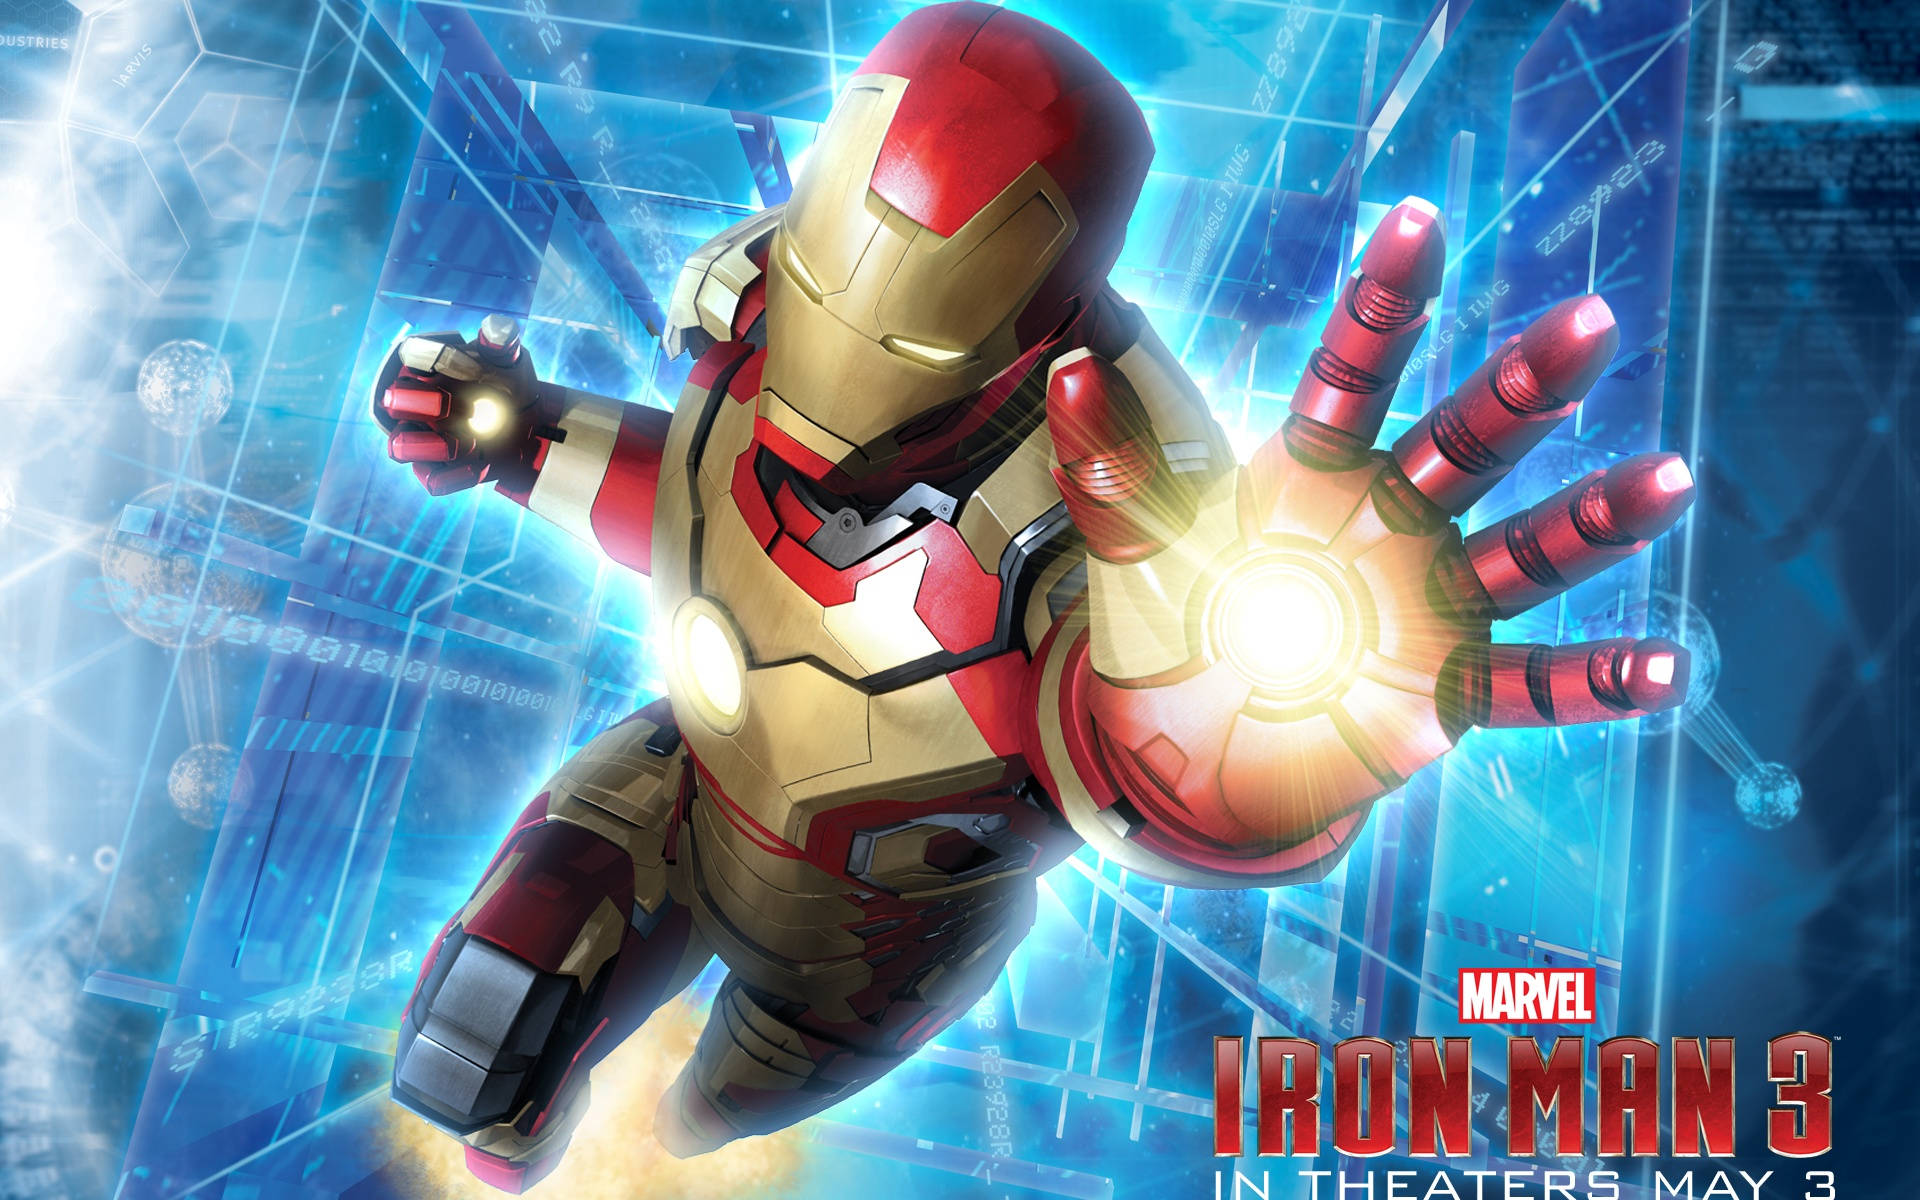 Cool Iron Man 3 Movie Poster Wallpaper